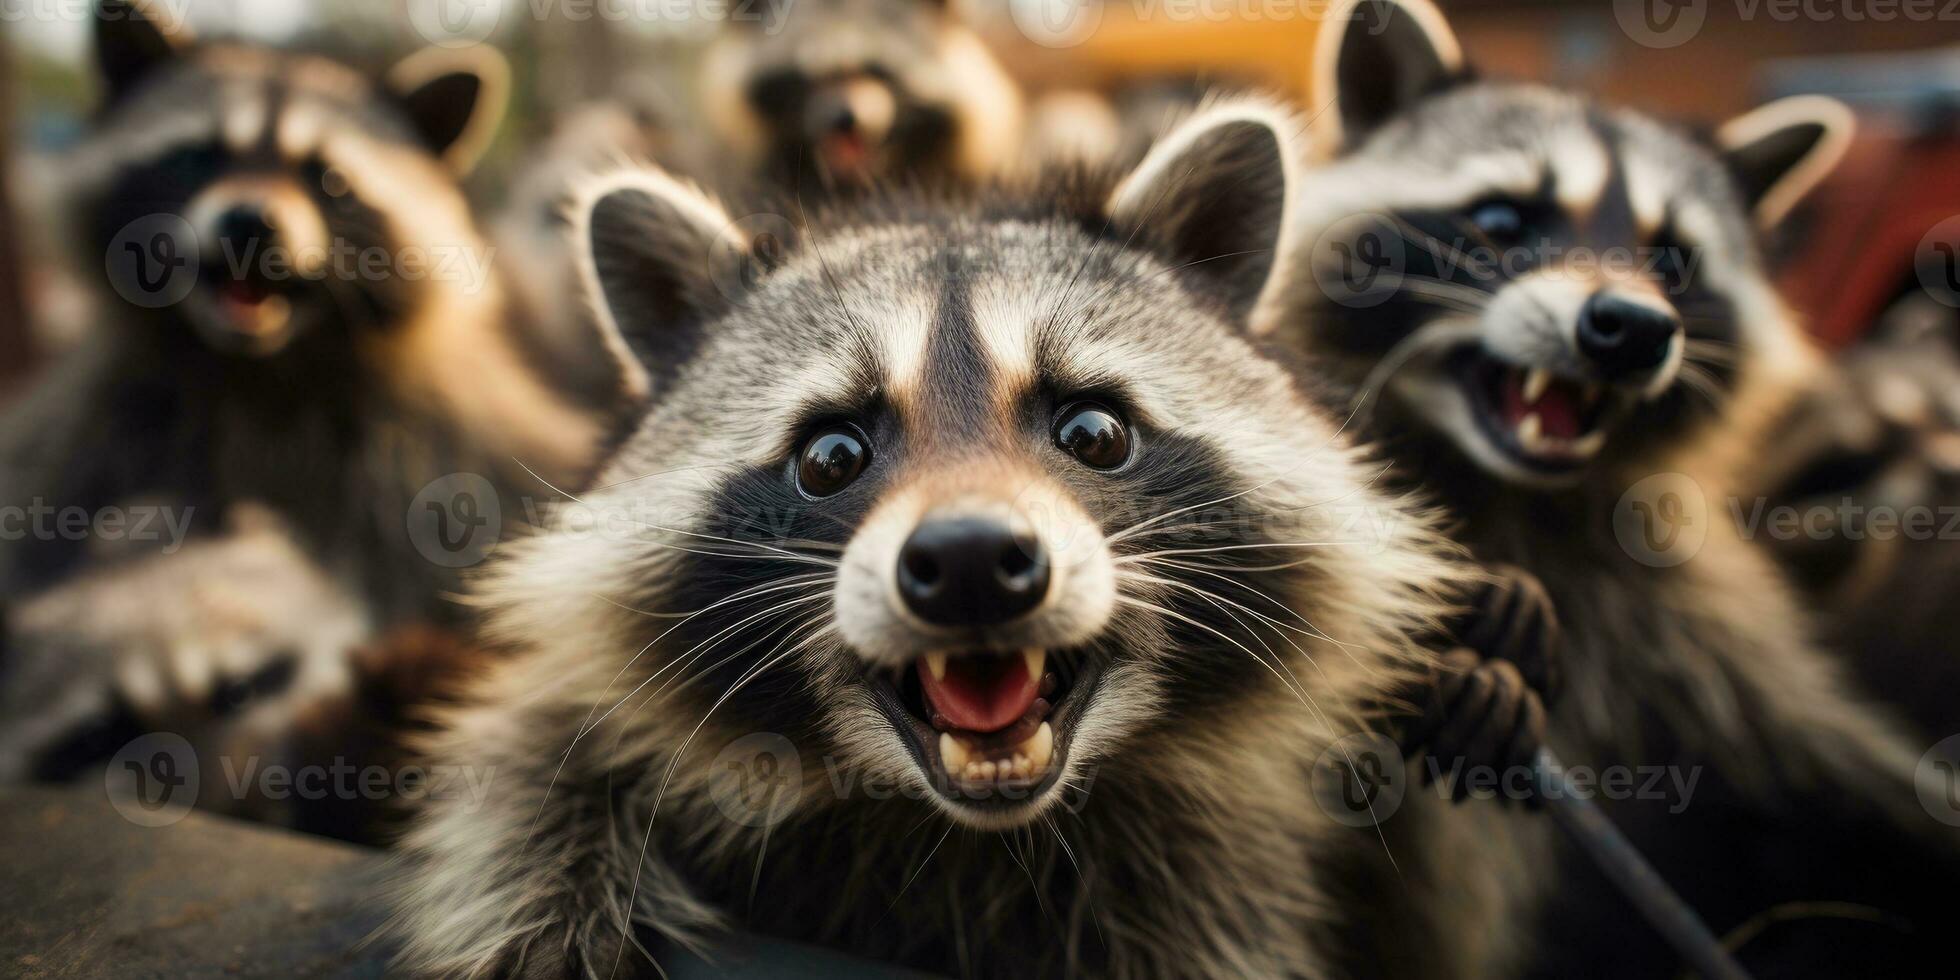 Cute and funny raccoons look into camera lens. Generative AI photo